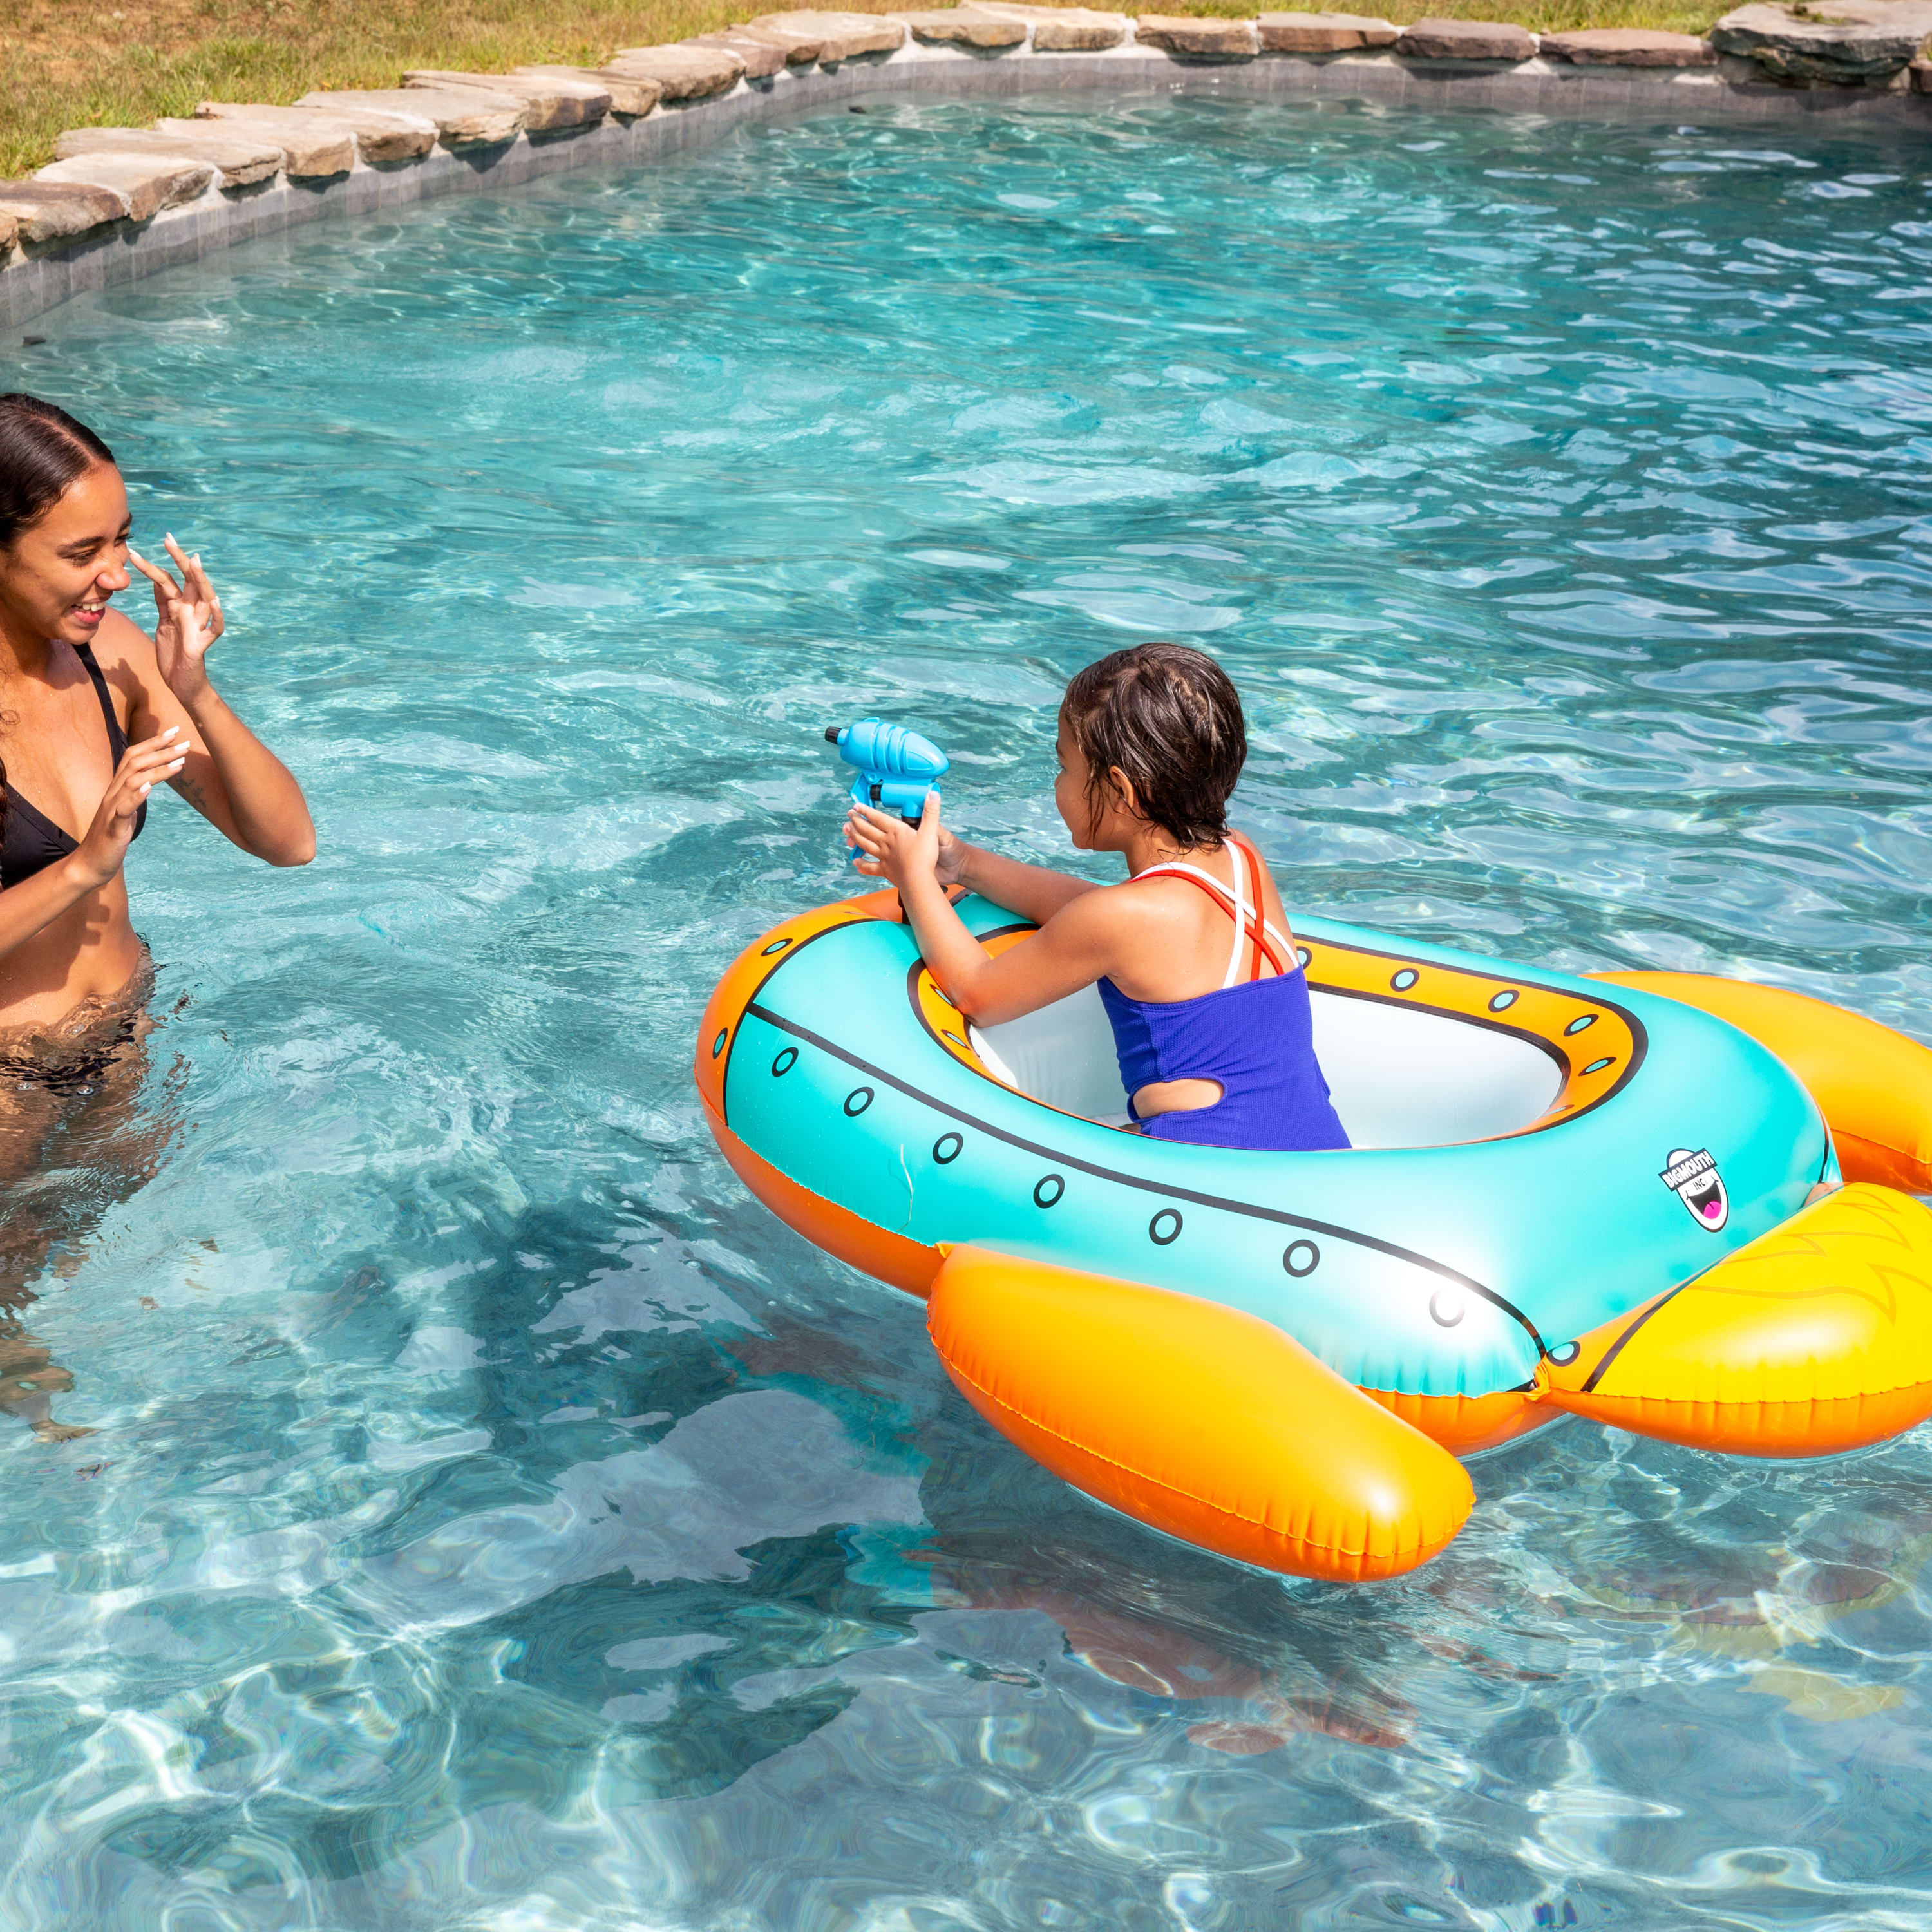 Mermaid Tail Saddle Seat Pool Floatie | BigMouth Inc. Pool Floats